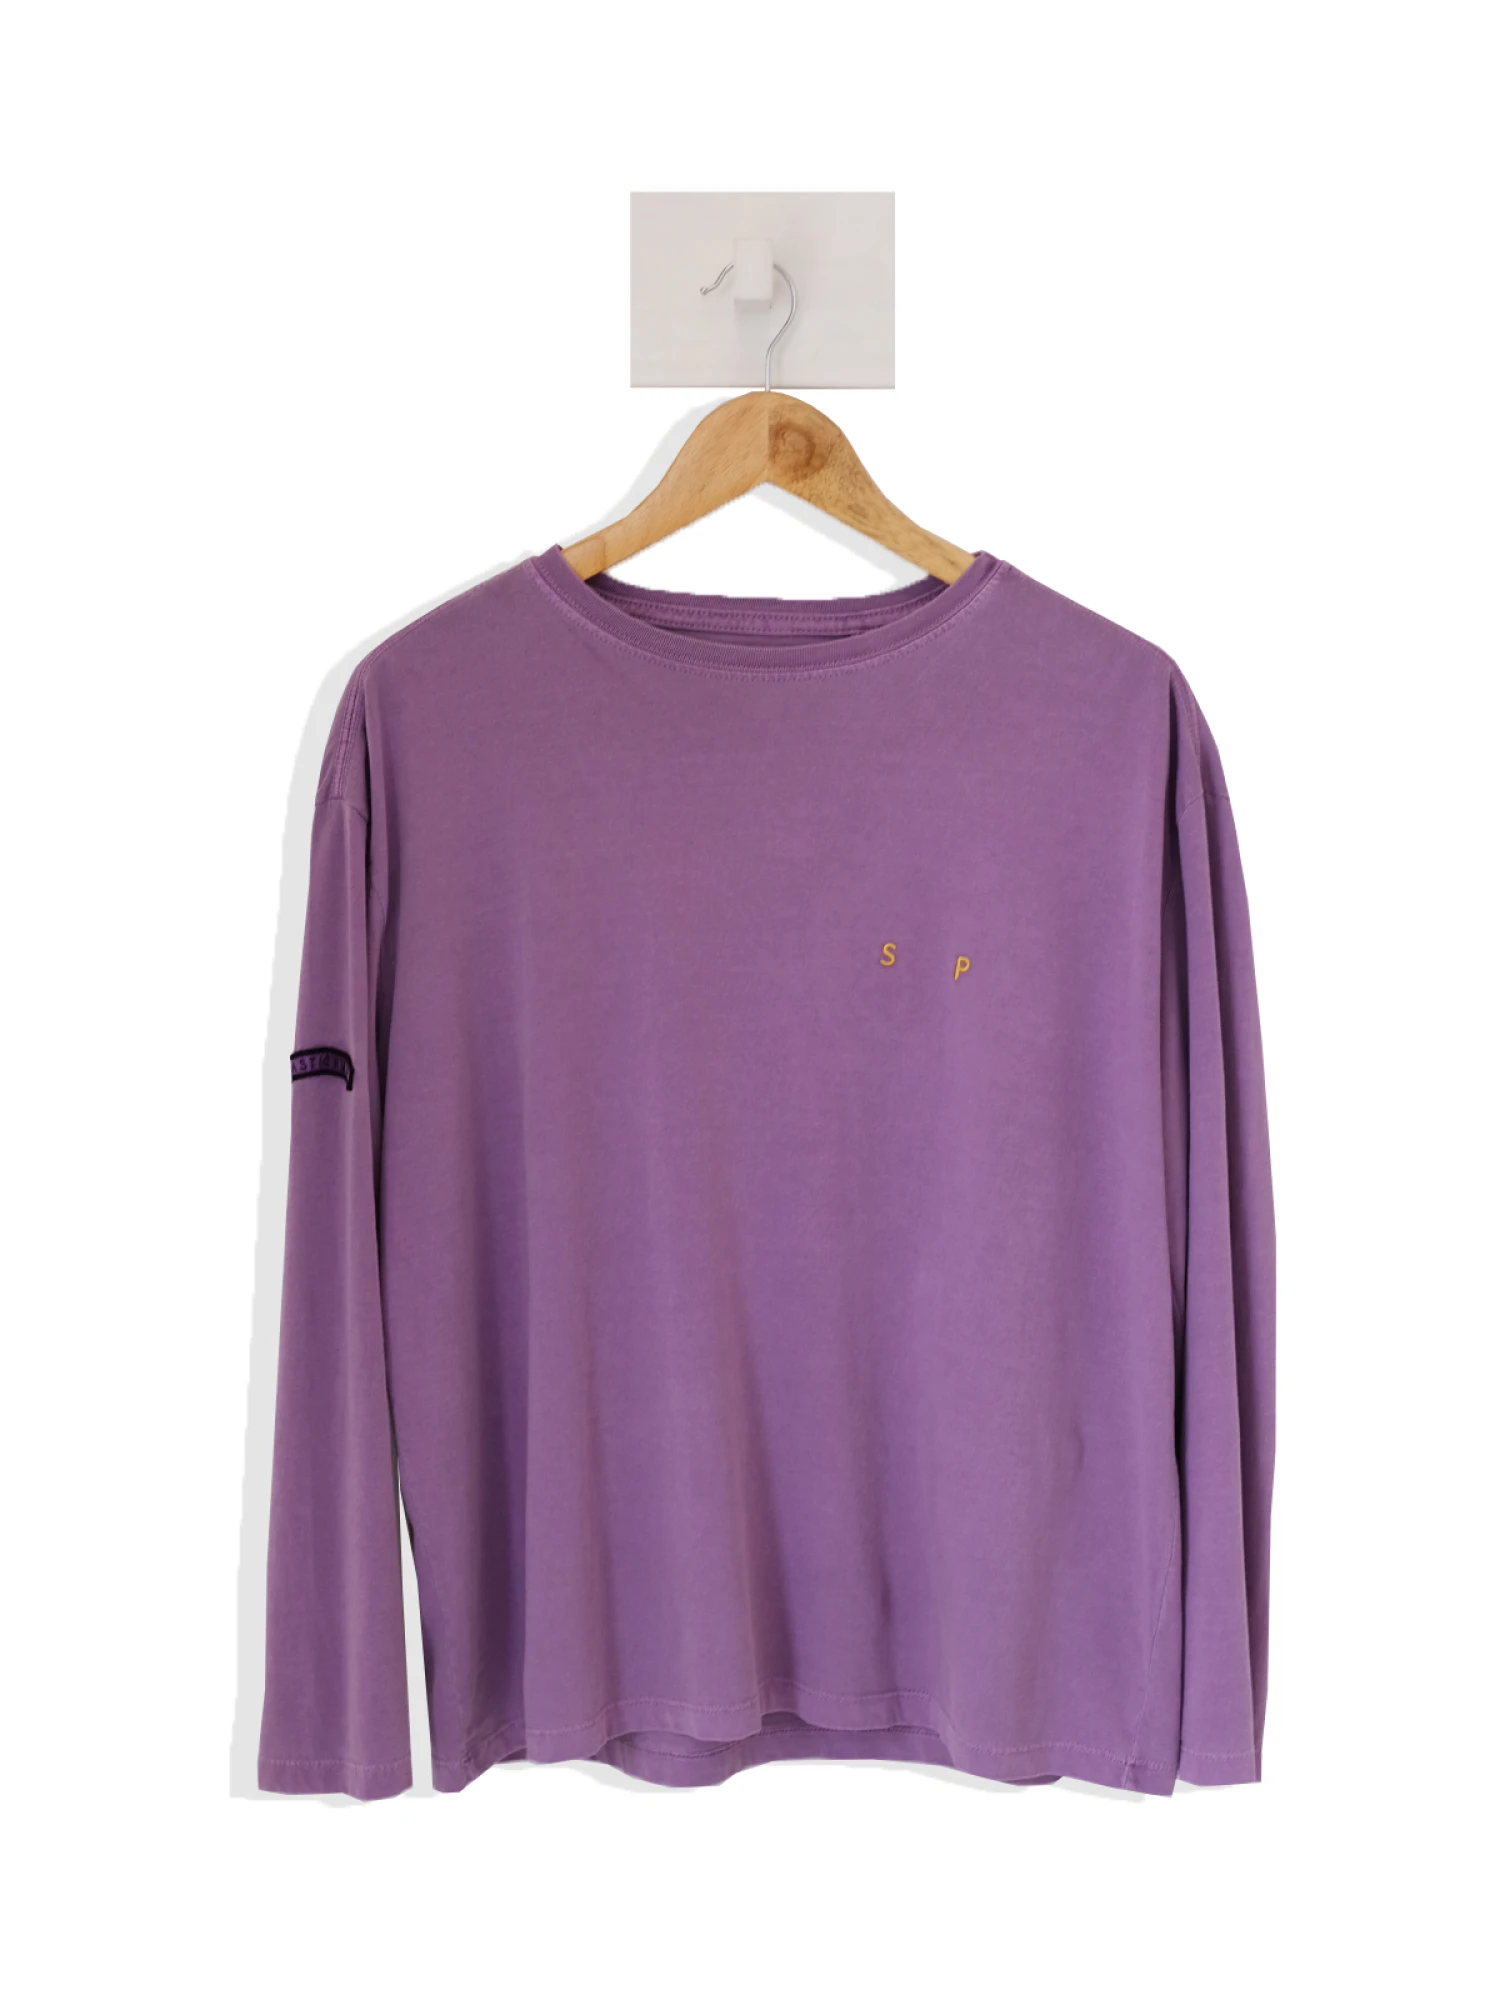 T-shirt Prince violeta s